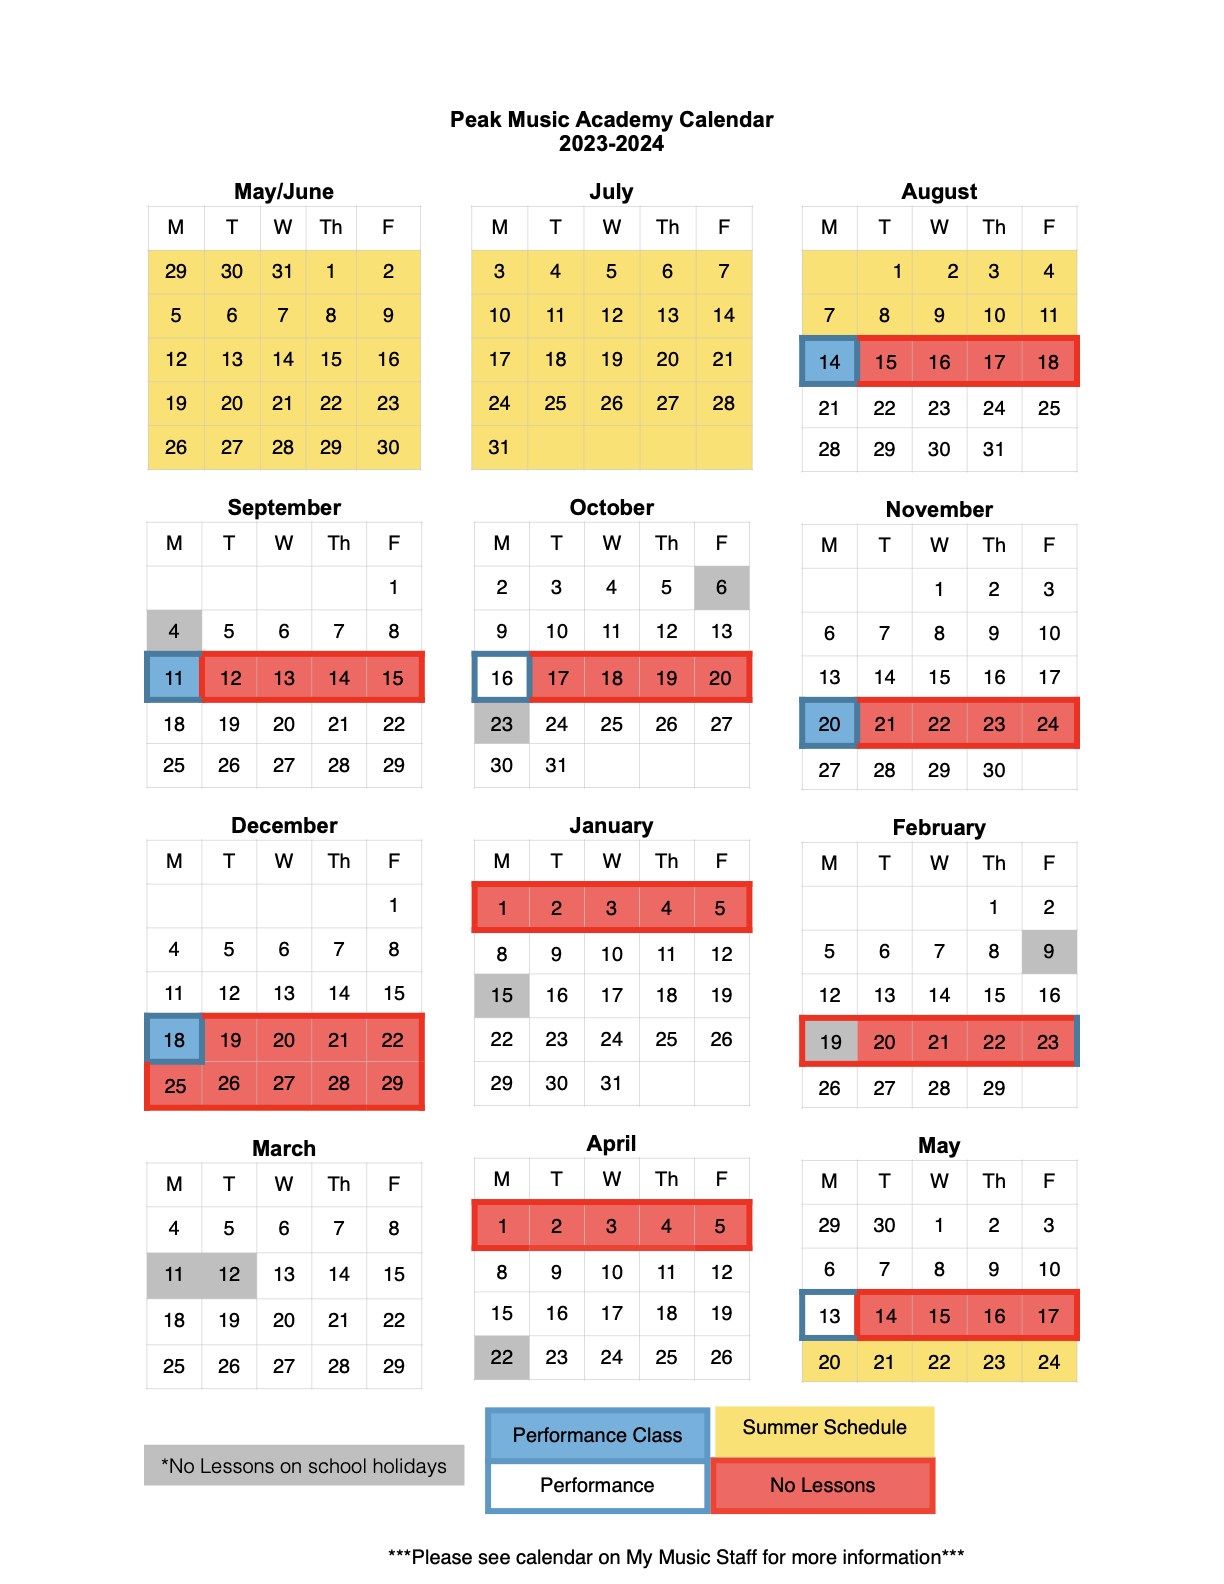 PMA Calendar 2023-24.1.jpeg